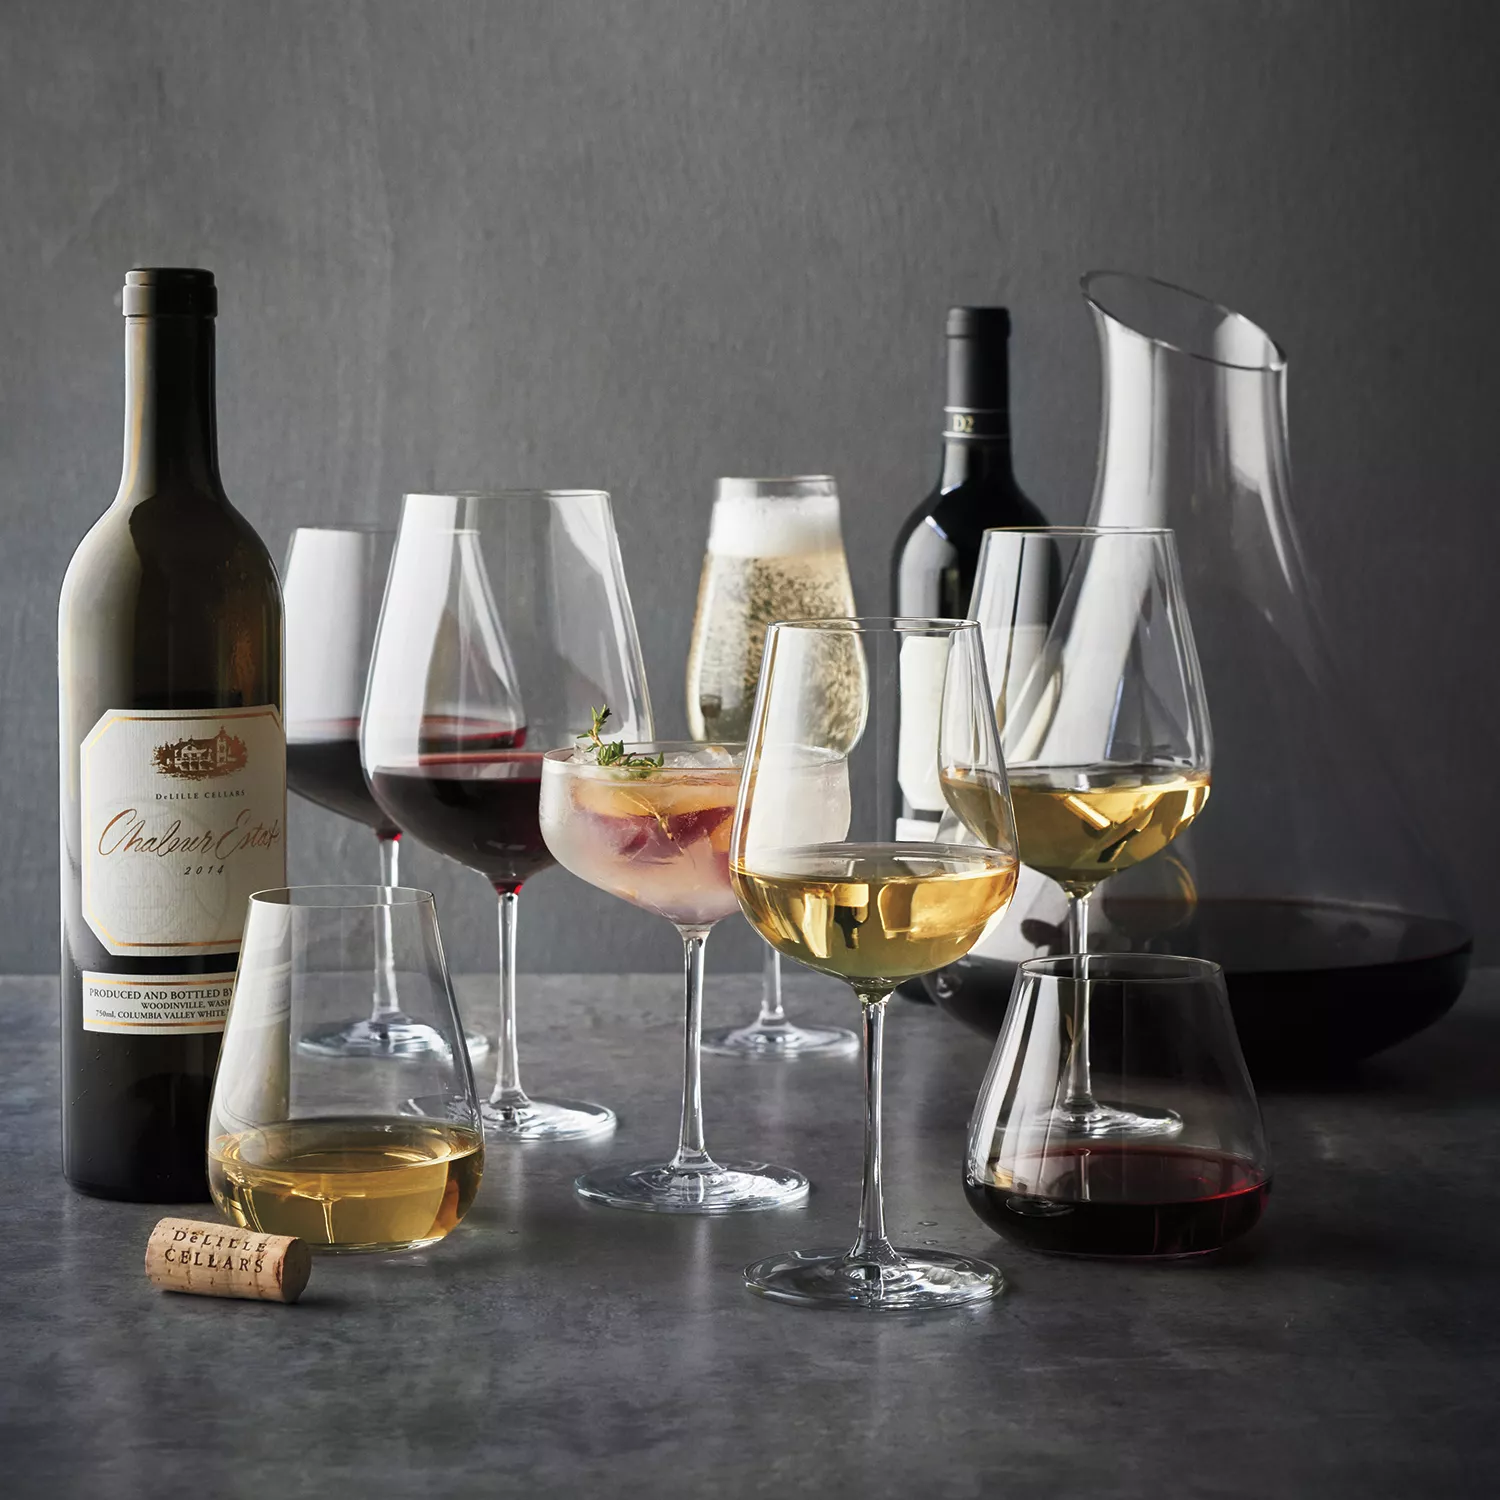 Schott Zwiesel Air Full-Bodied White Wine Glasses